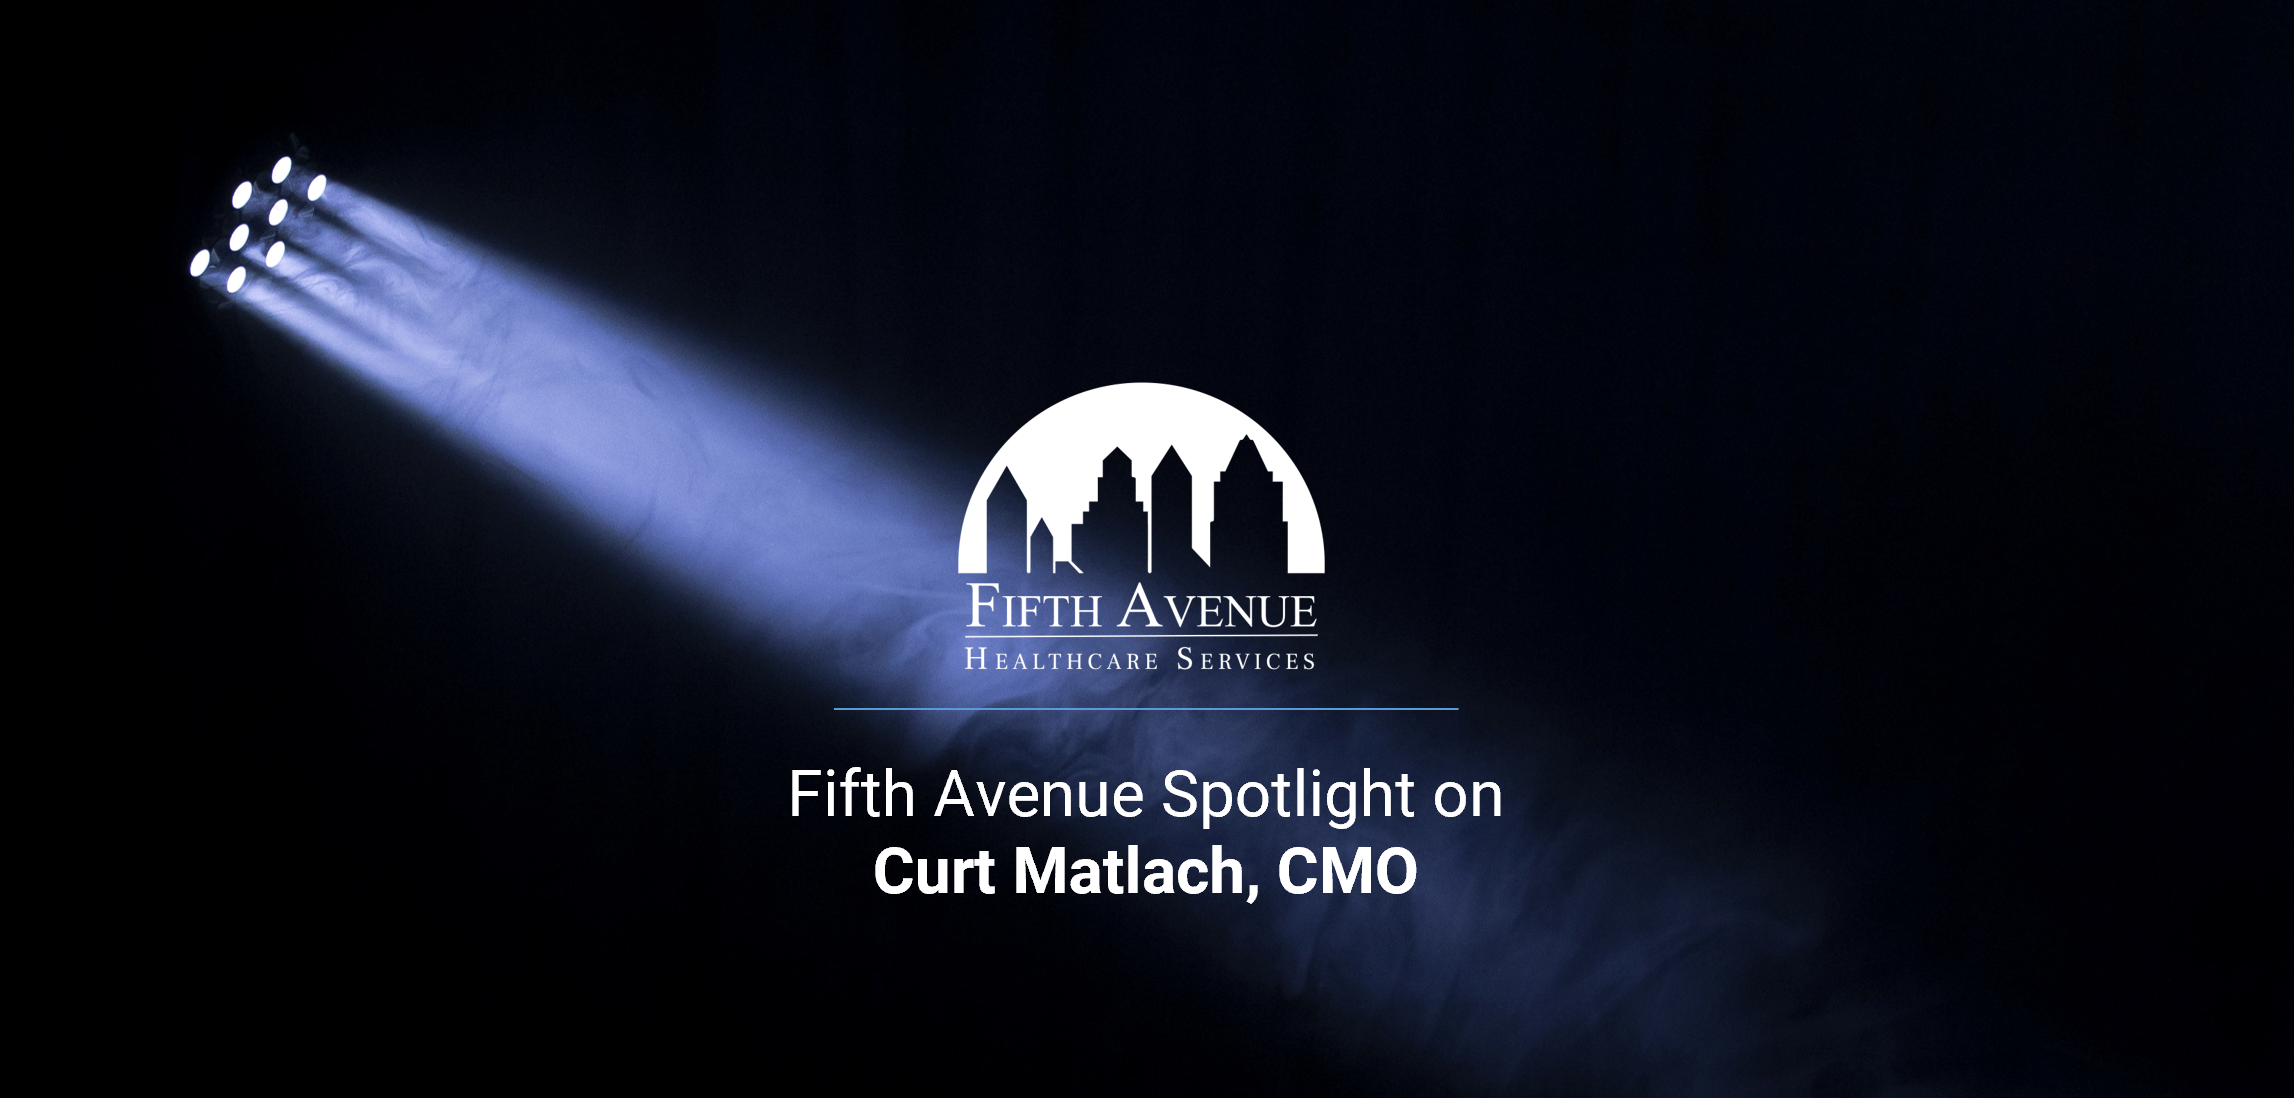 FifthAvenueHealthcareServices.com Fifth Avenue Spotlight Curt Matlach CMO